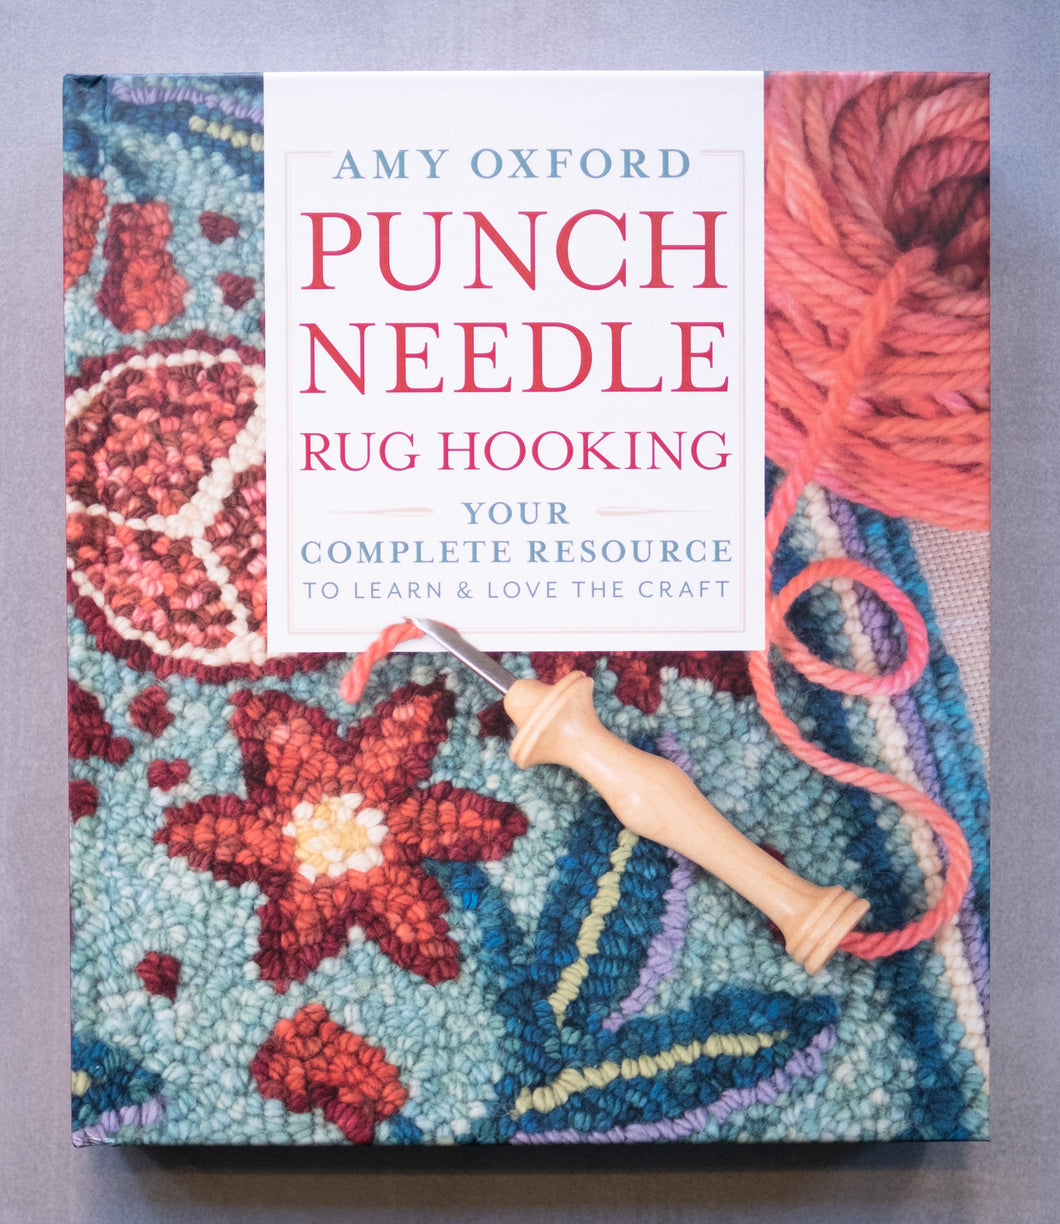 Punch Needle Rug Hooking